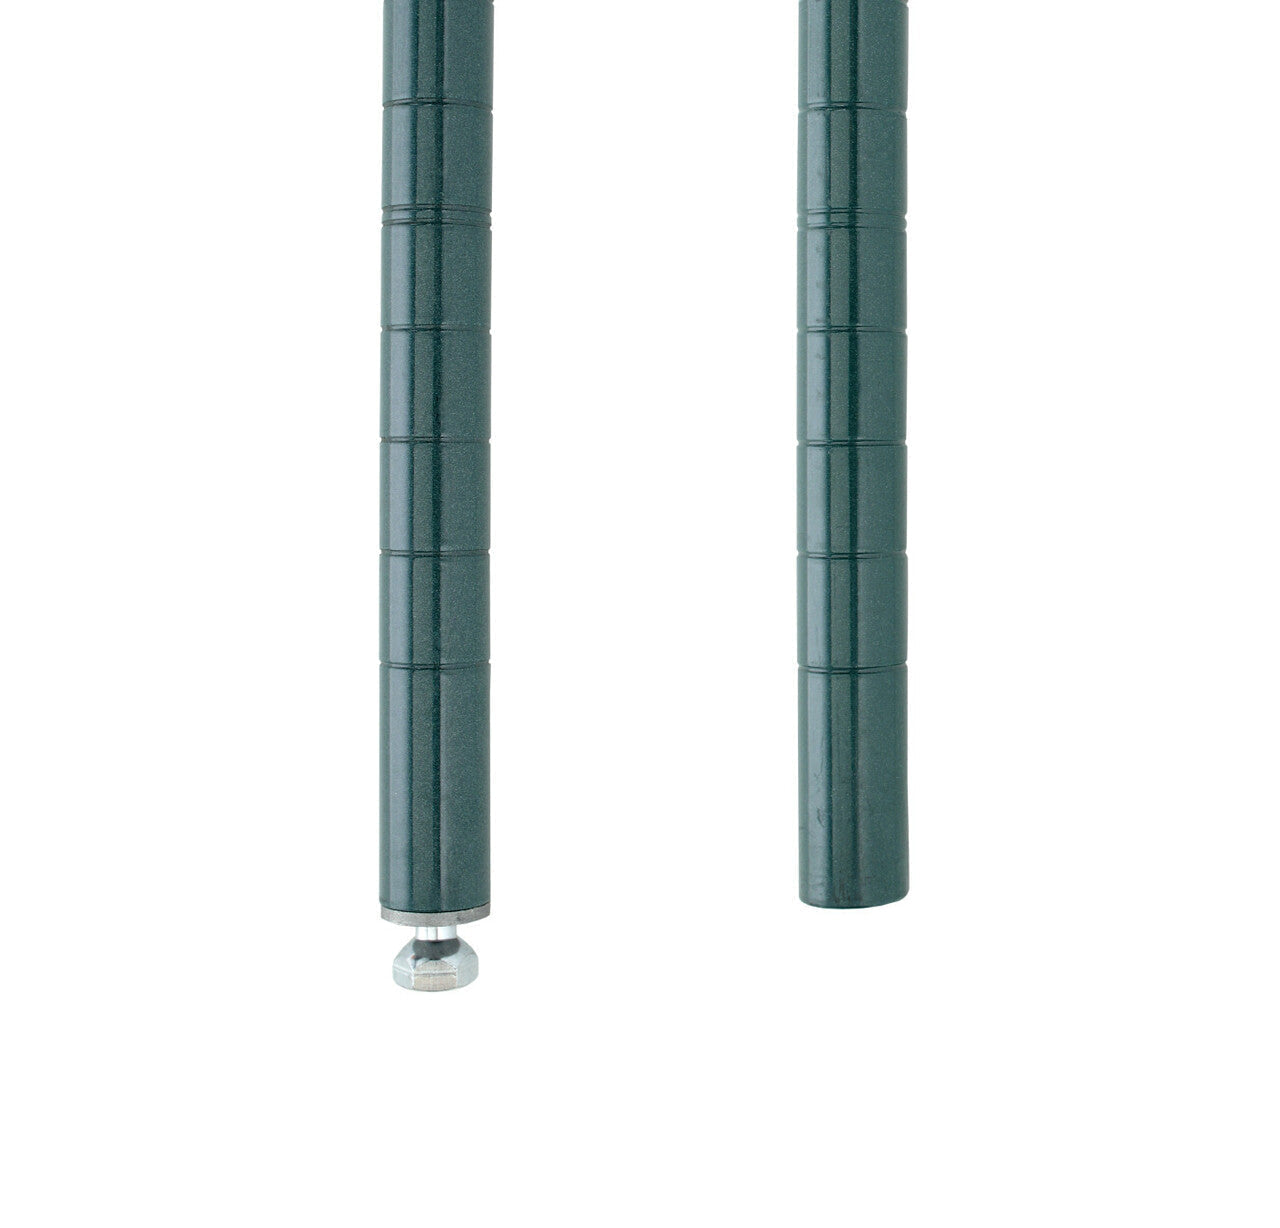 Metro Super Erecta 4-Shelf Industrial Wire Shelving Unit, Metroseal Green Epoxy (183 x 53 x 180 CM)